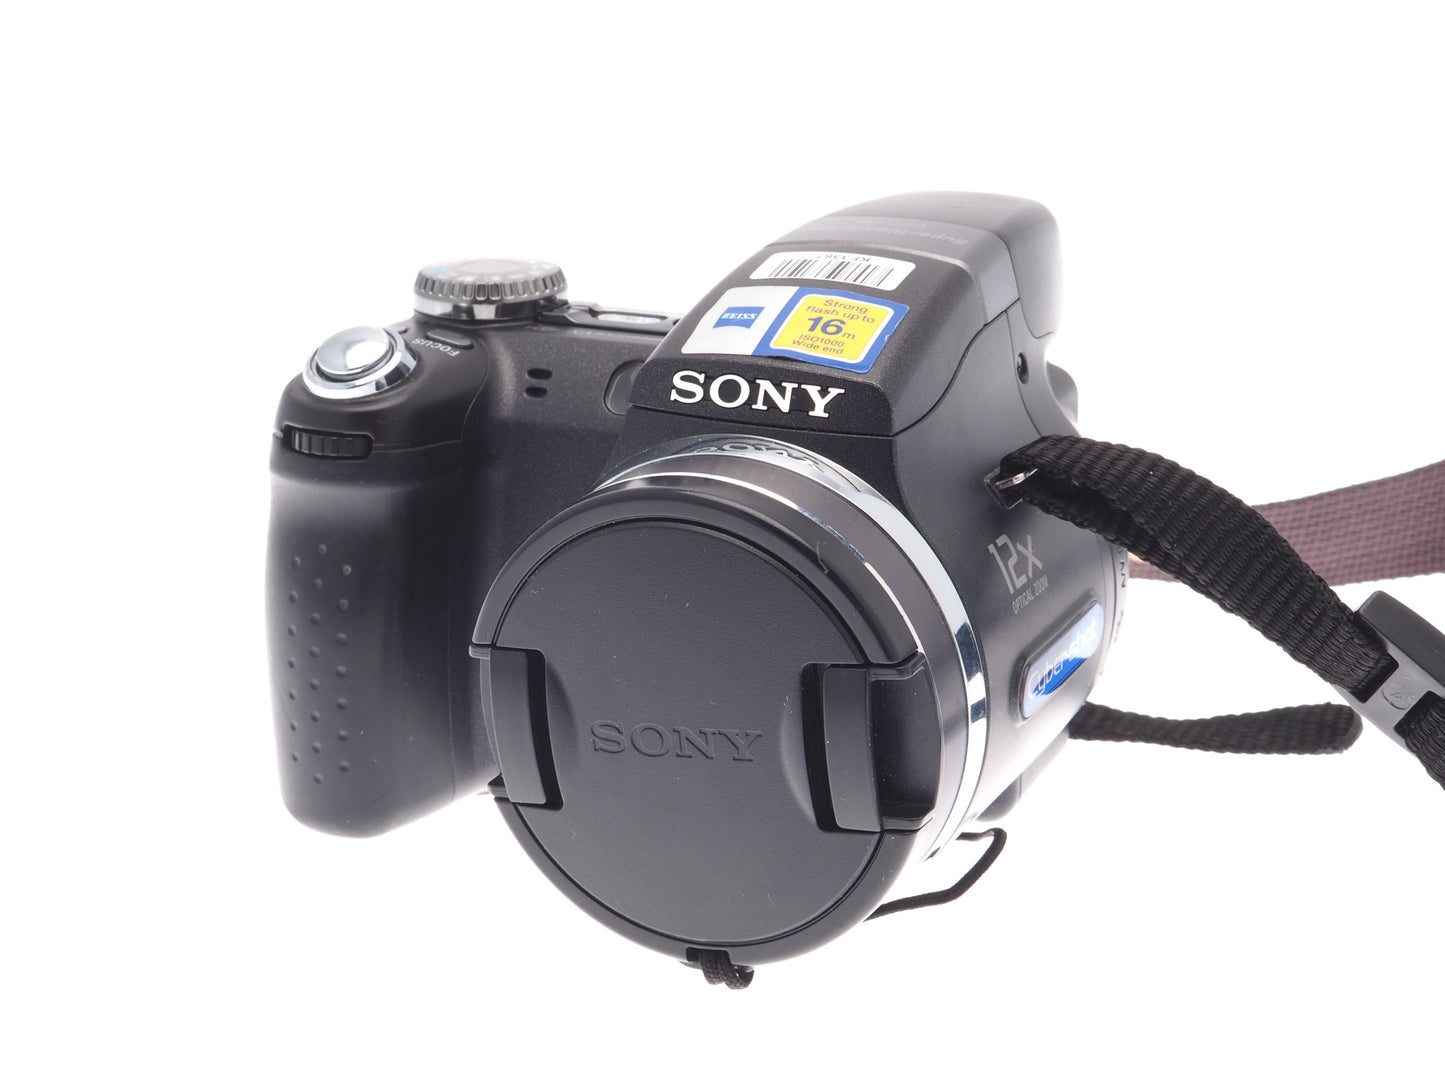 Sony Cyber-shot DSC-H5 - Camera